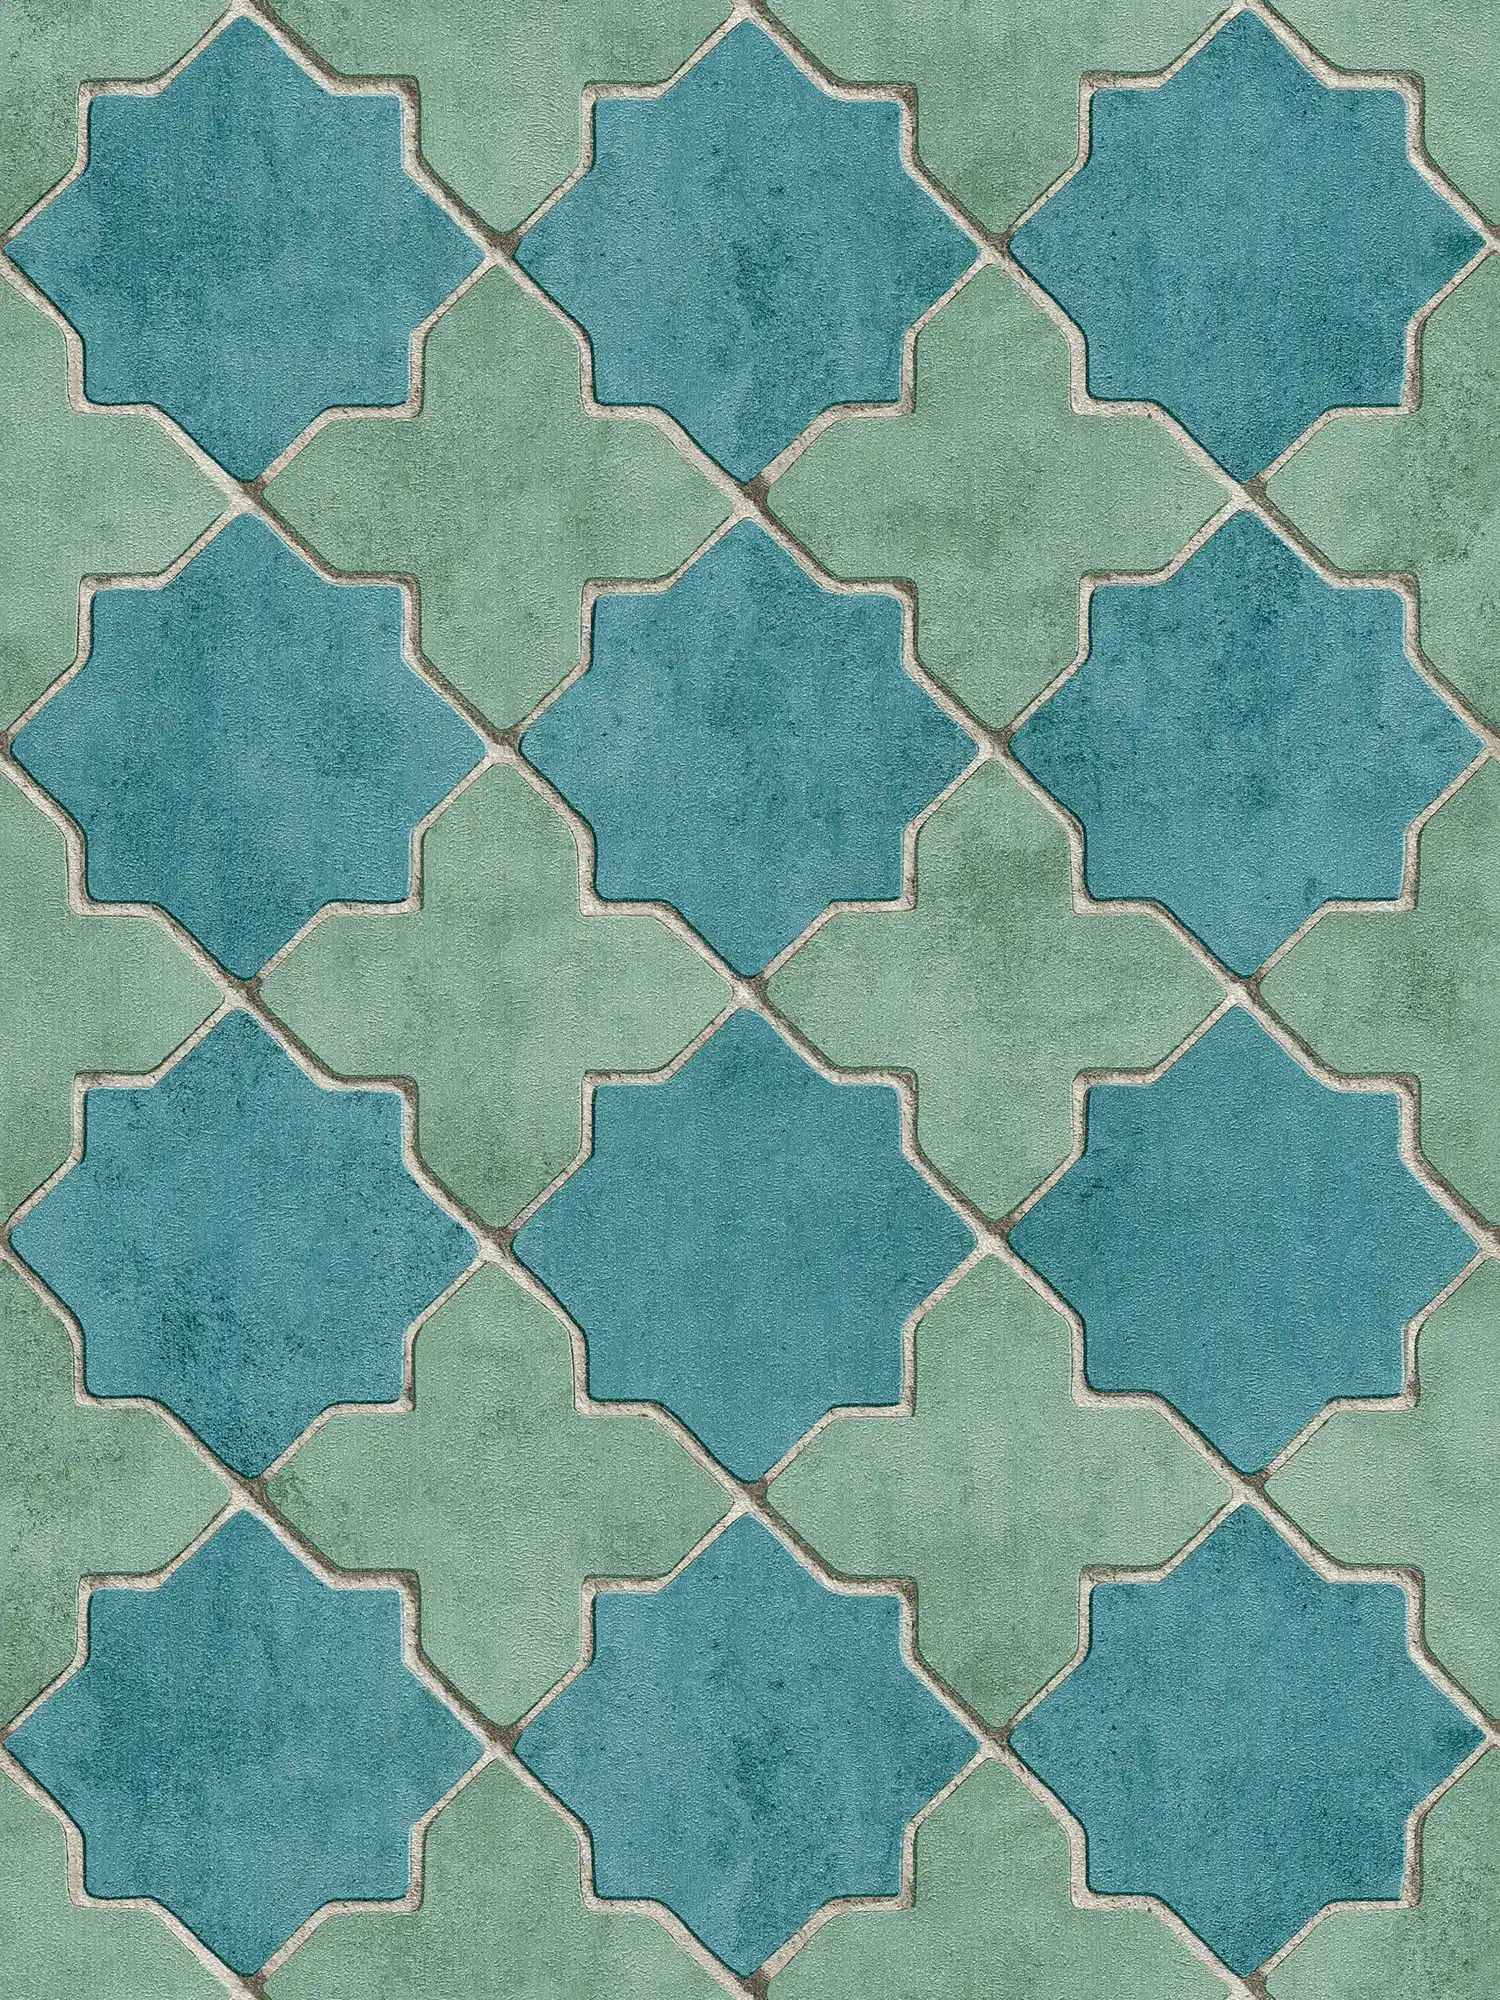 Tile wallpaper mosaic look - blue, green, beige
